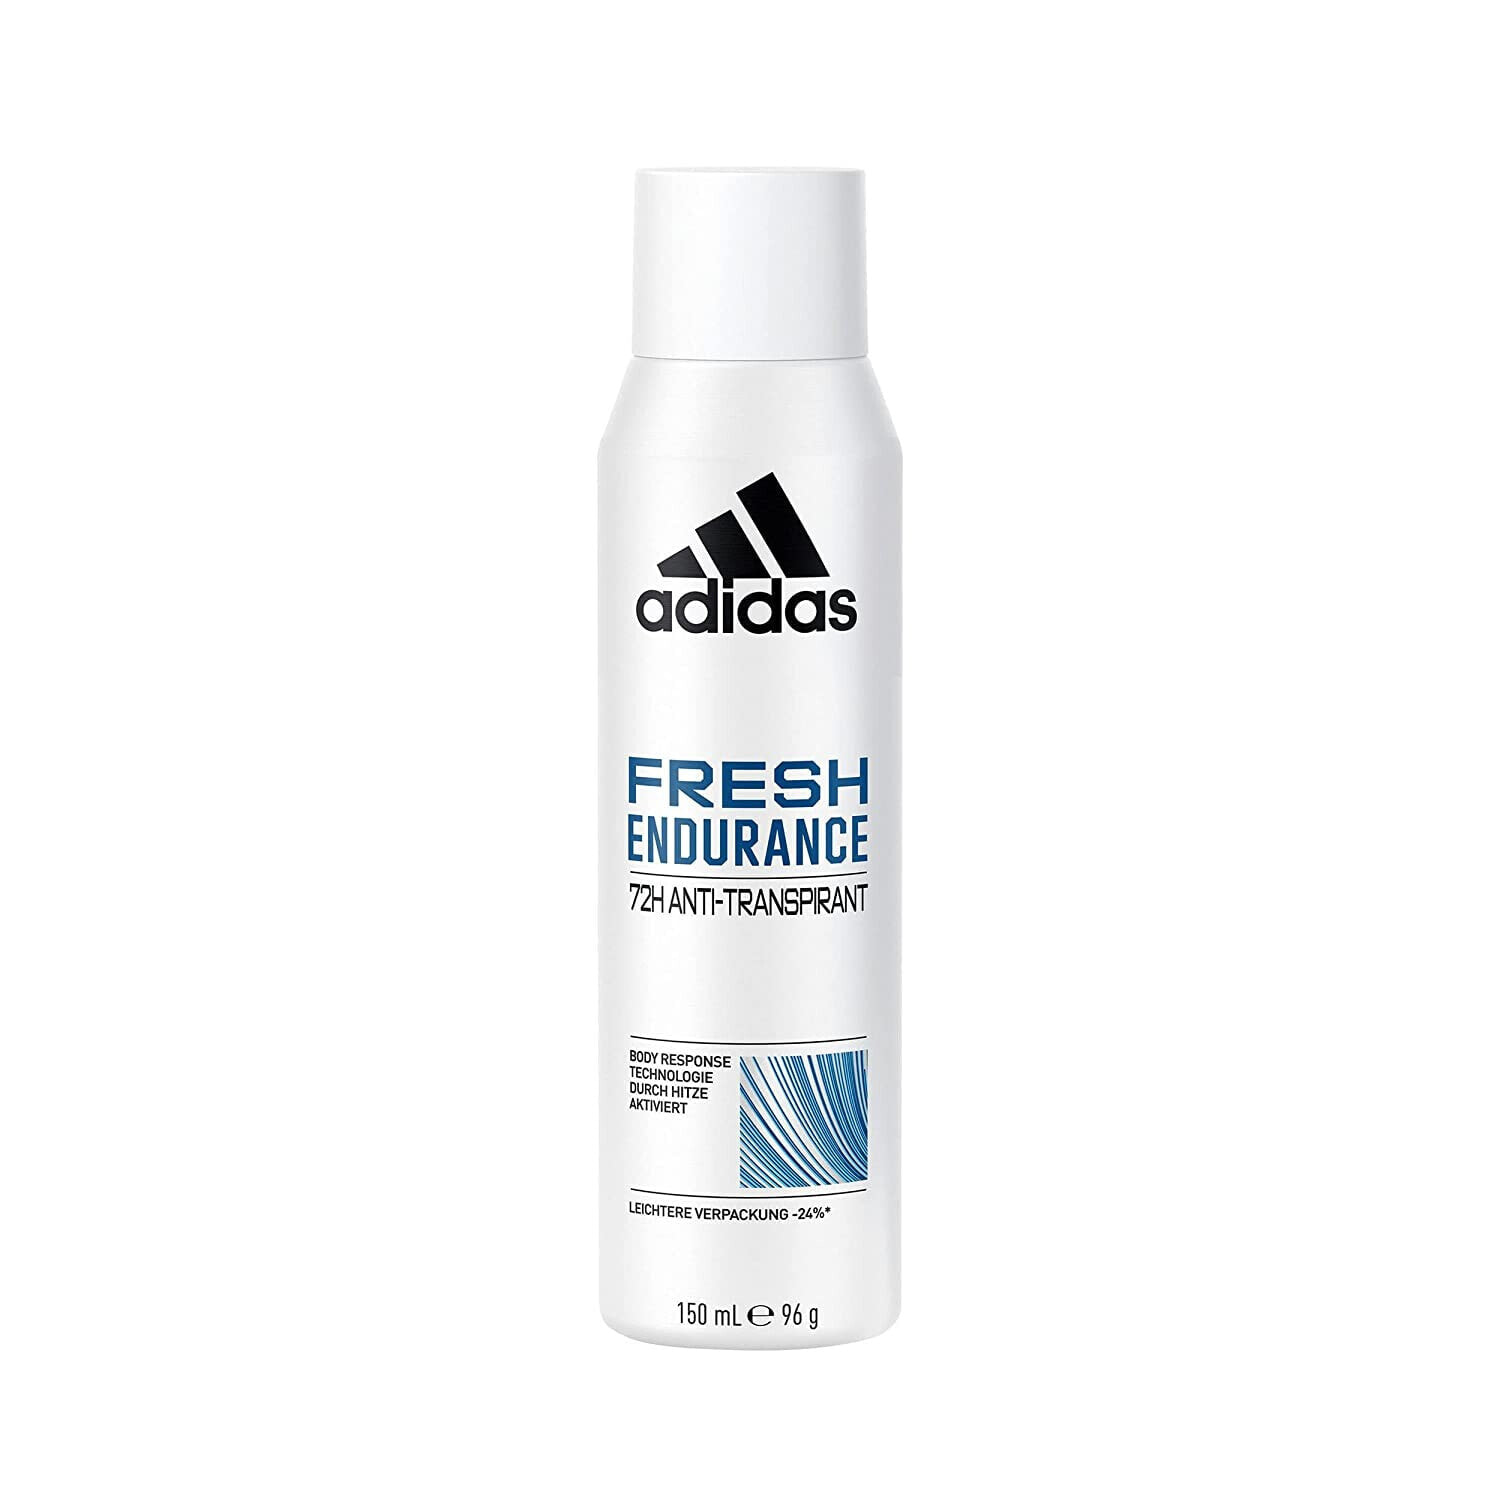 adidas Fresh Endurance Antiperspirant Spray for Her, 72 Hours Dry Freshness and Floral Aromatic Fragrance, 150 ml